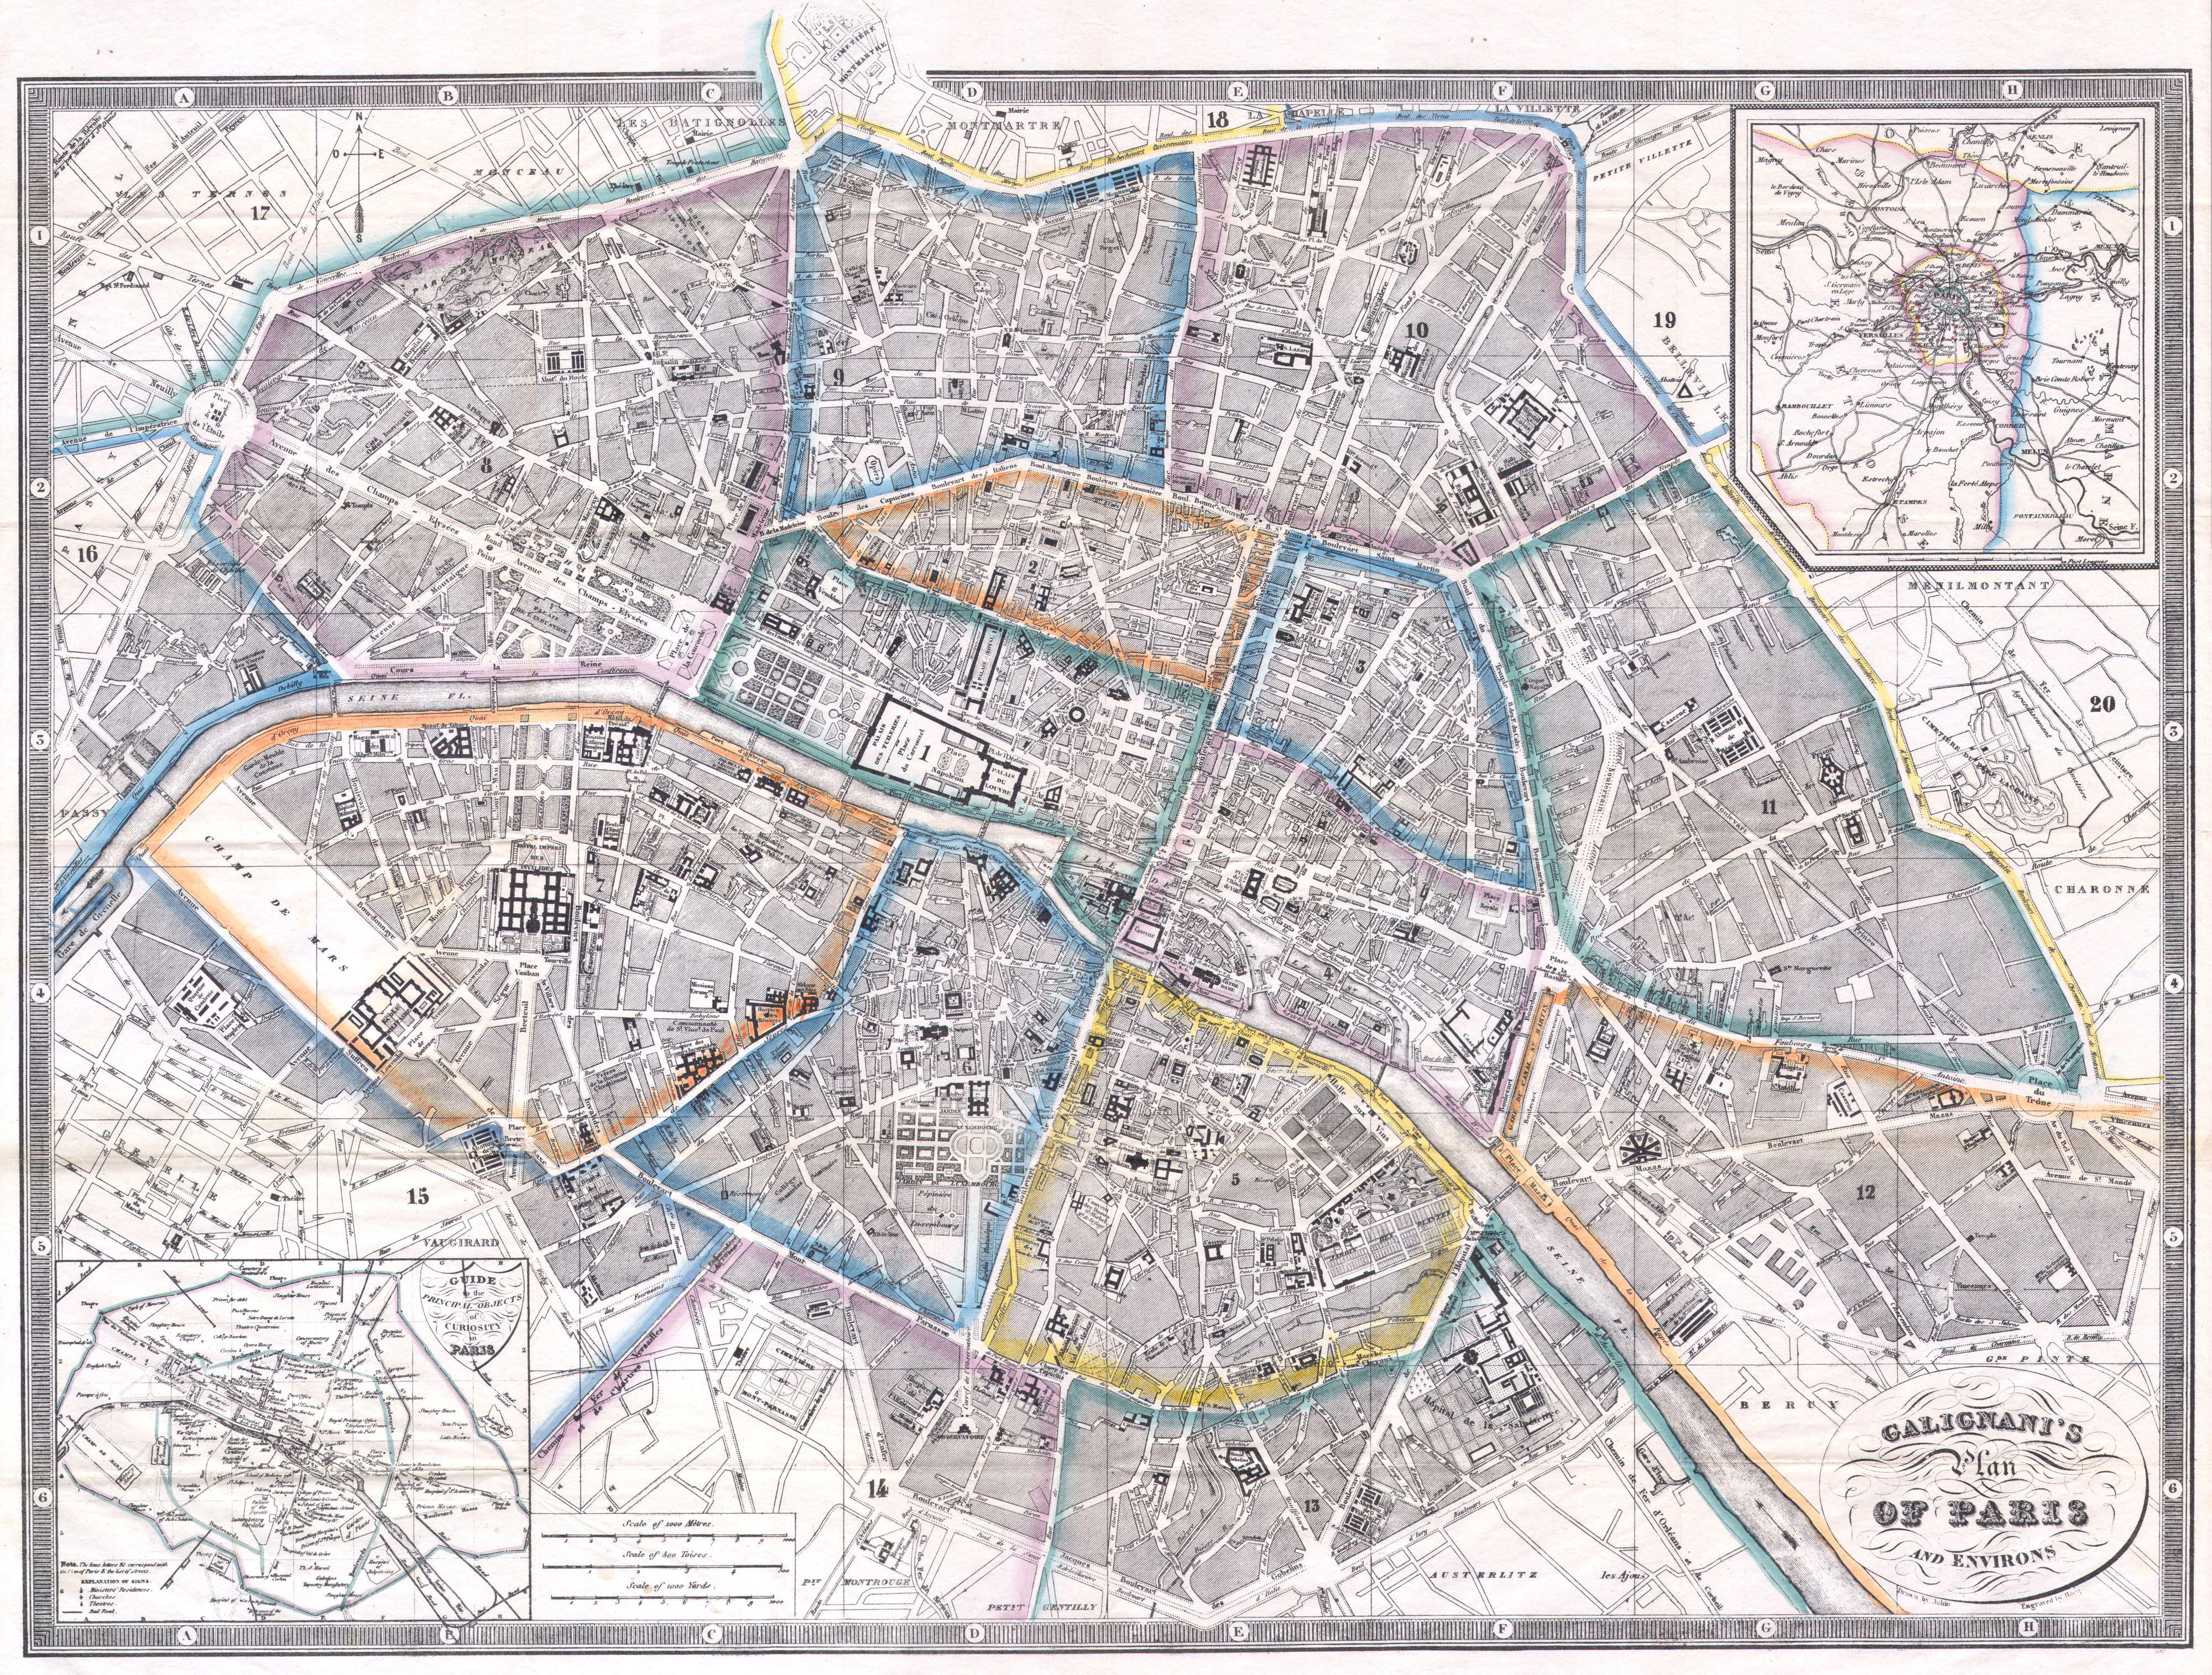 44-1865_Galignanis_Plan_of_Paris_and_Environs_France_-_Geographicus_-_Paris-galignani-1865